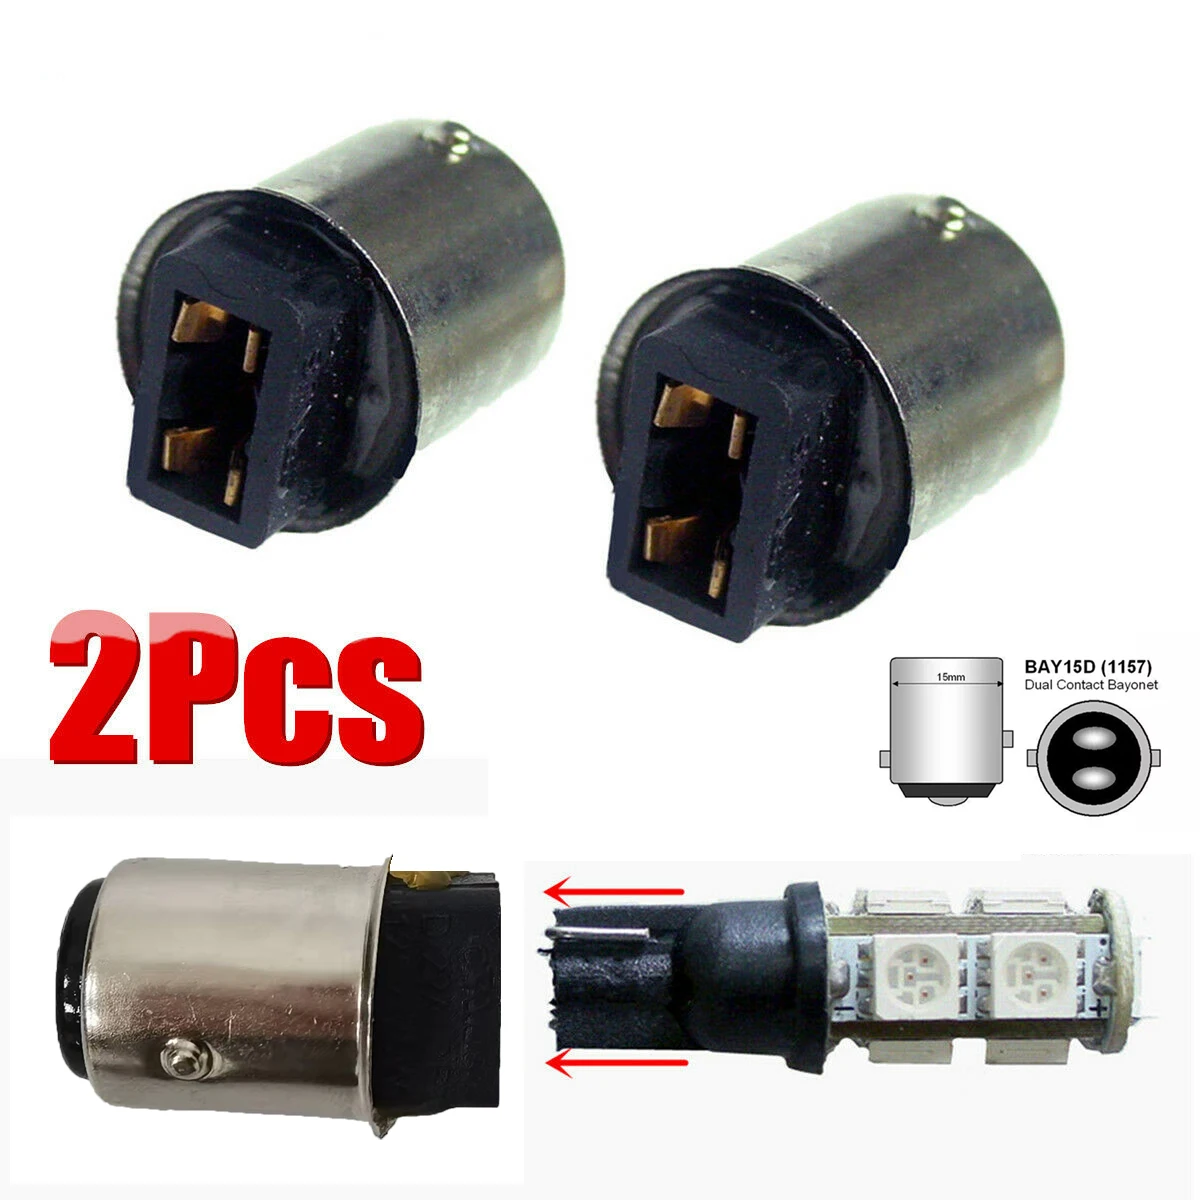 

2Pcs T10 W5W 168 194 to 1157 BAY15D Two Contact 1156 Ba15s LED Light Lamp Bulb Base Converter Adapter Transformer Socket